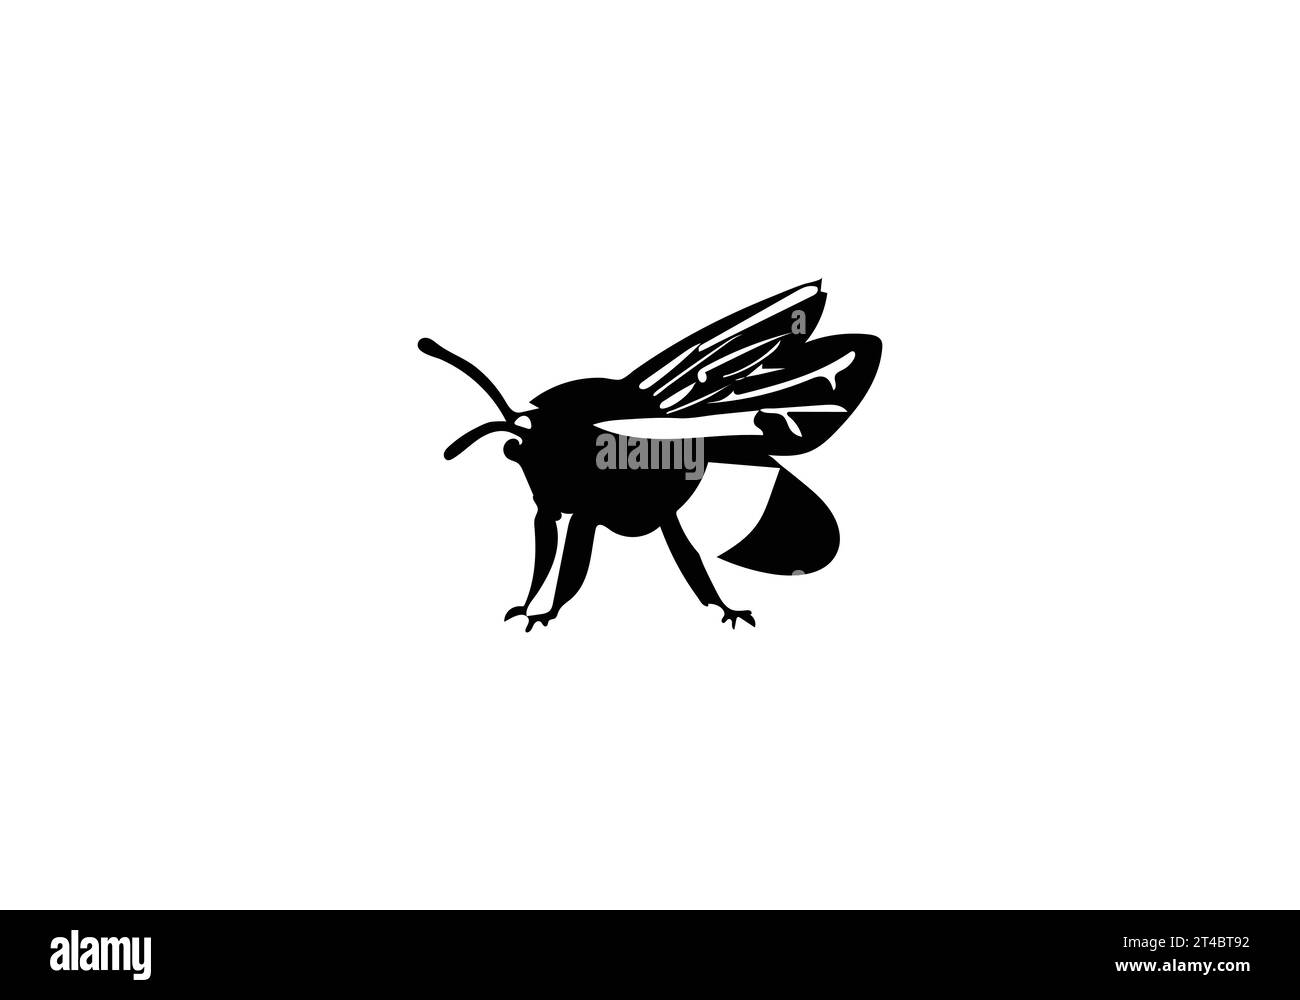 Barbut s Cuckoo Bumblebee minimal style icon illustration Stock Vector